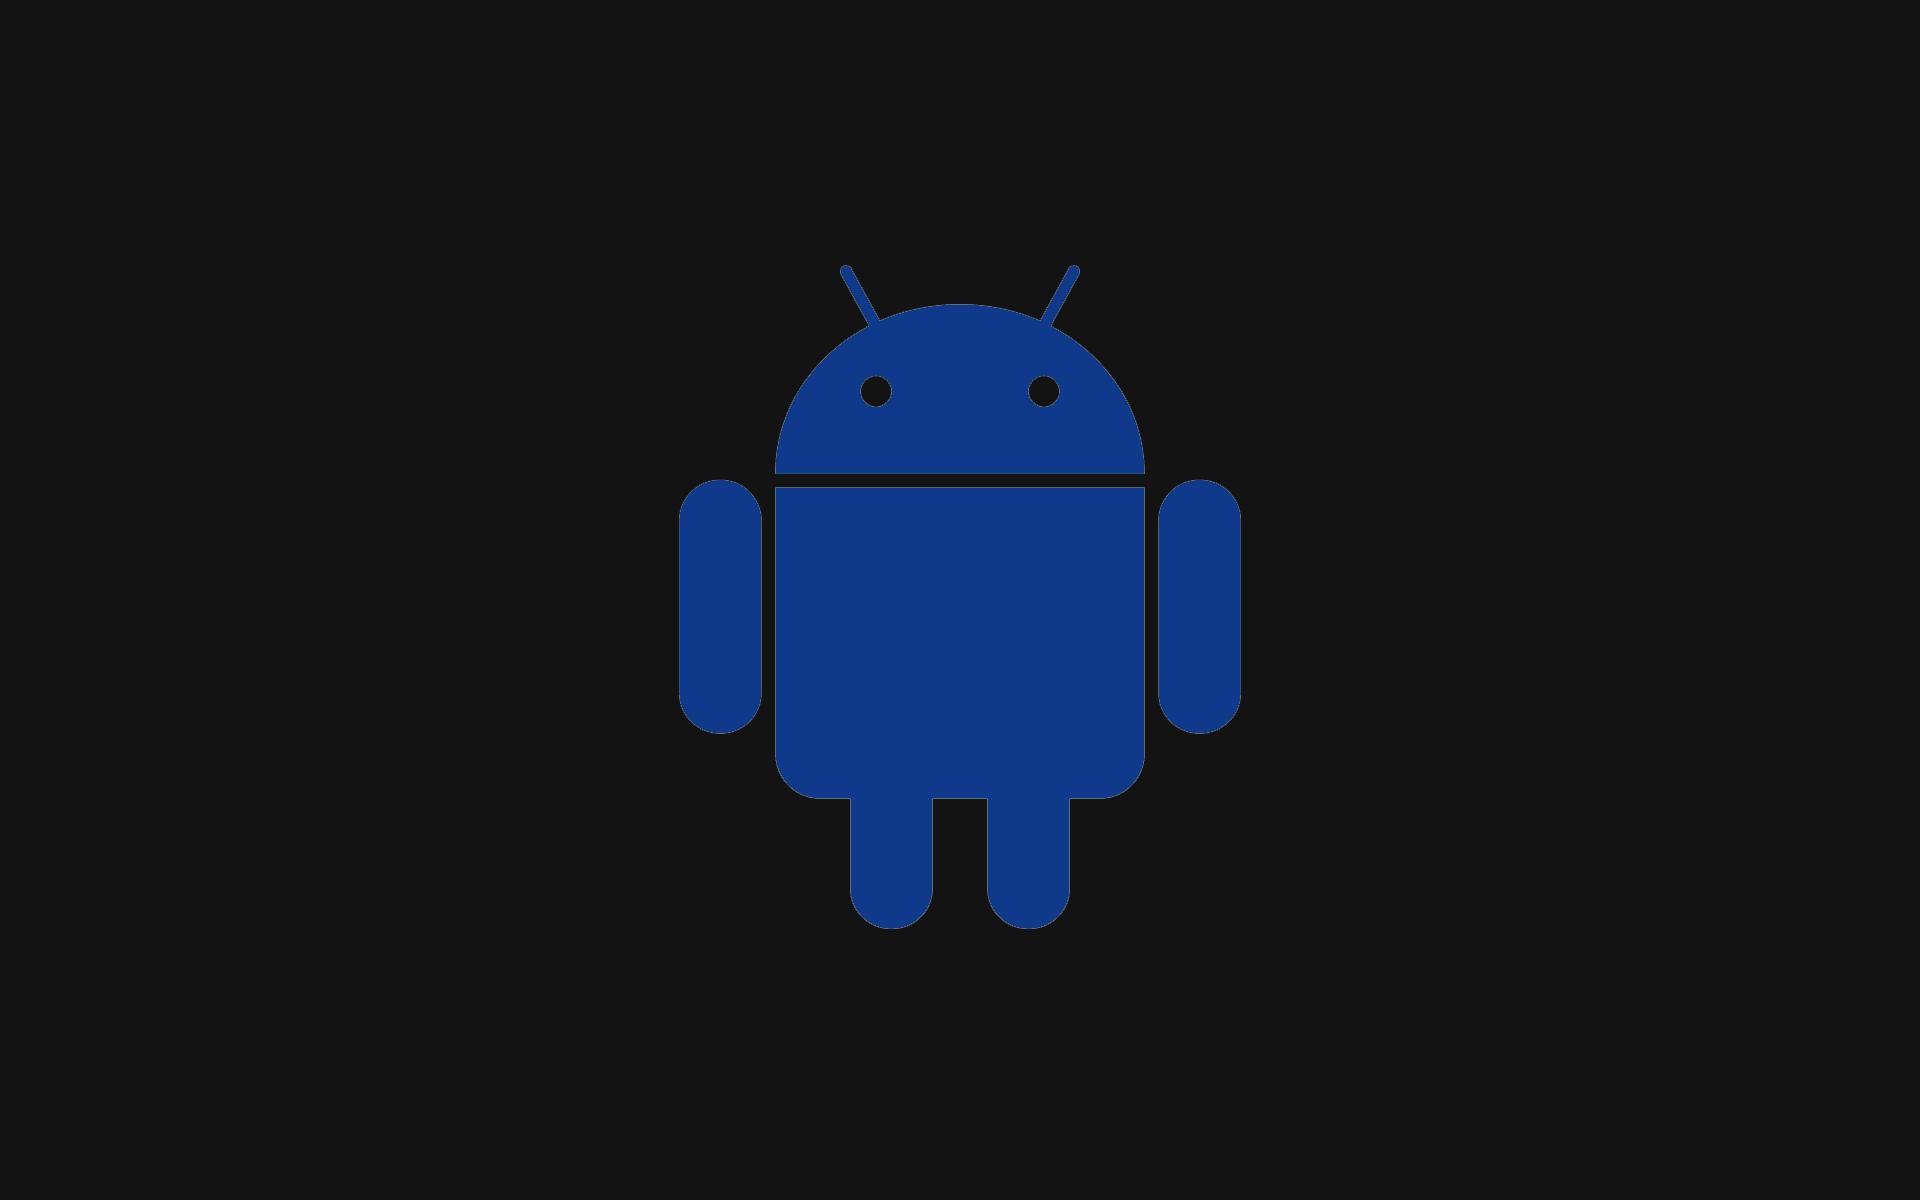 Android Logo Wallpaper HD